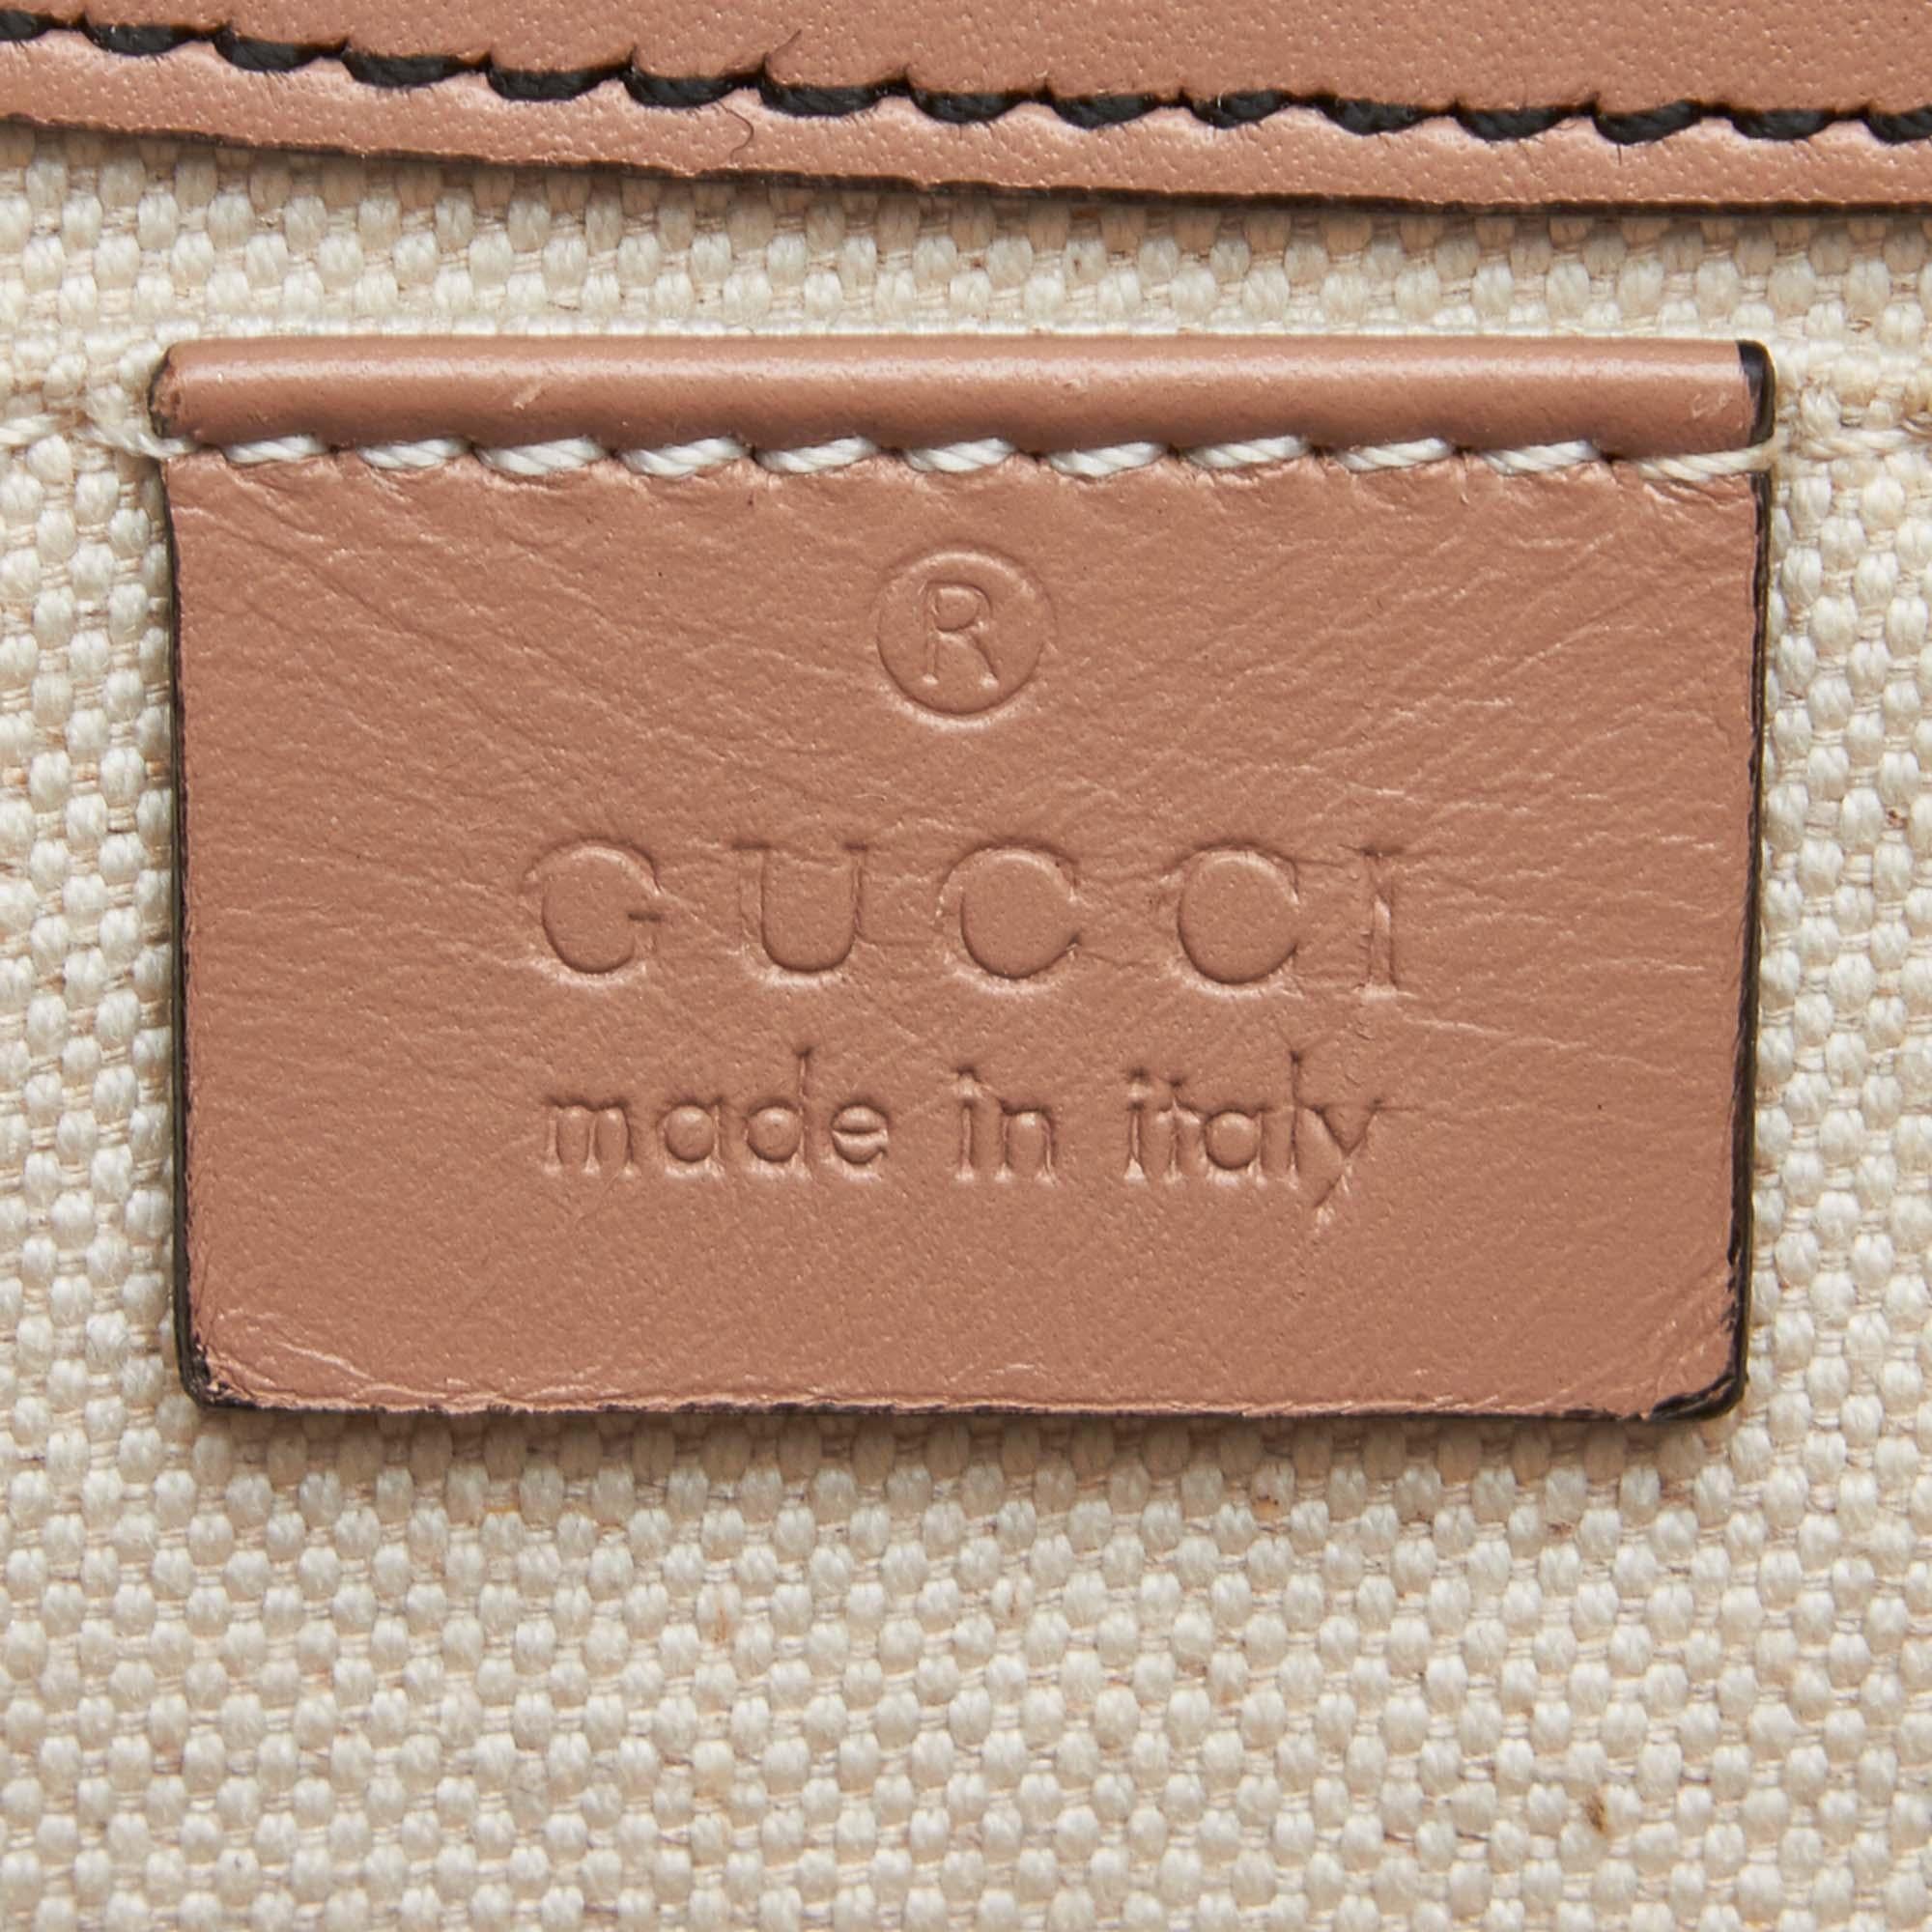 Vintage Authentic Gucci Brown Medium Emily Shoulder Bag ITALY w MEDIUM  For Sale 2